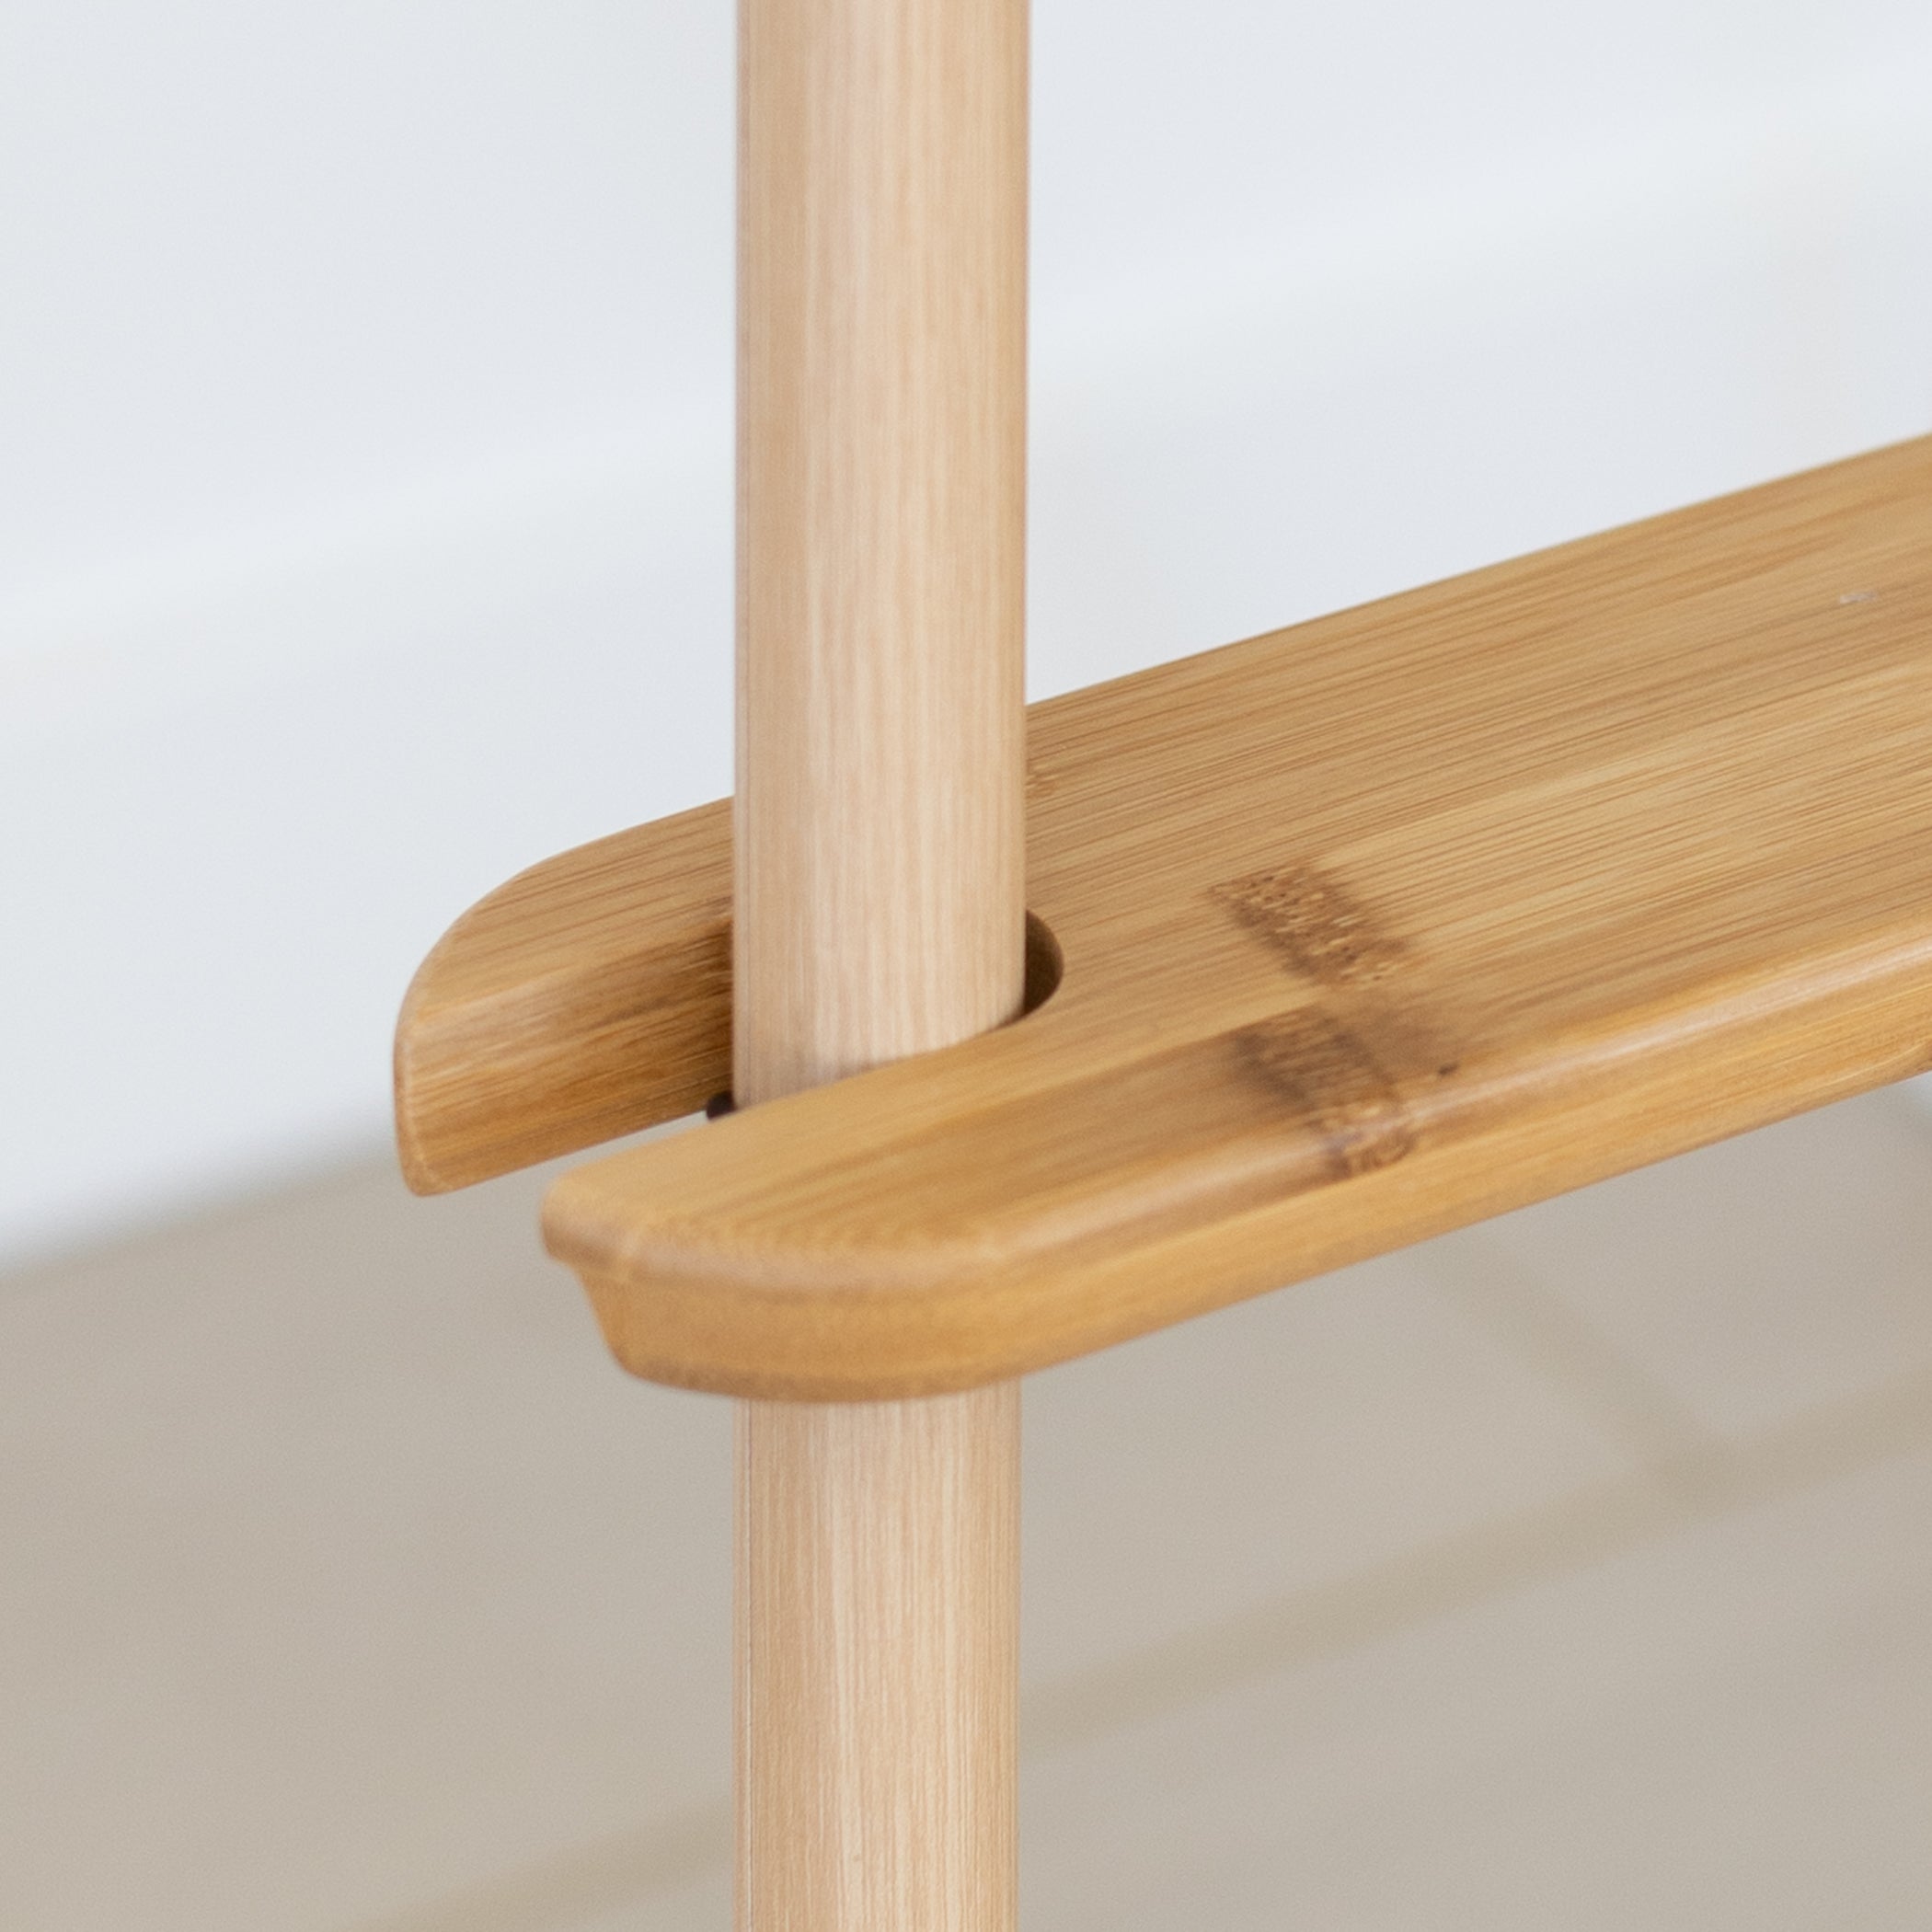 Impresa Bamboo Foot Rest for IKEA High Chair Accessories (Beige) 